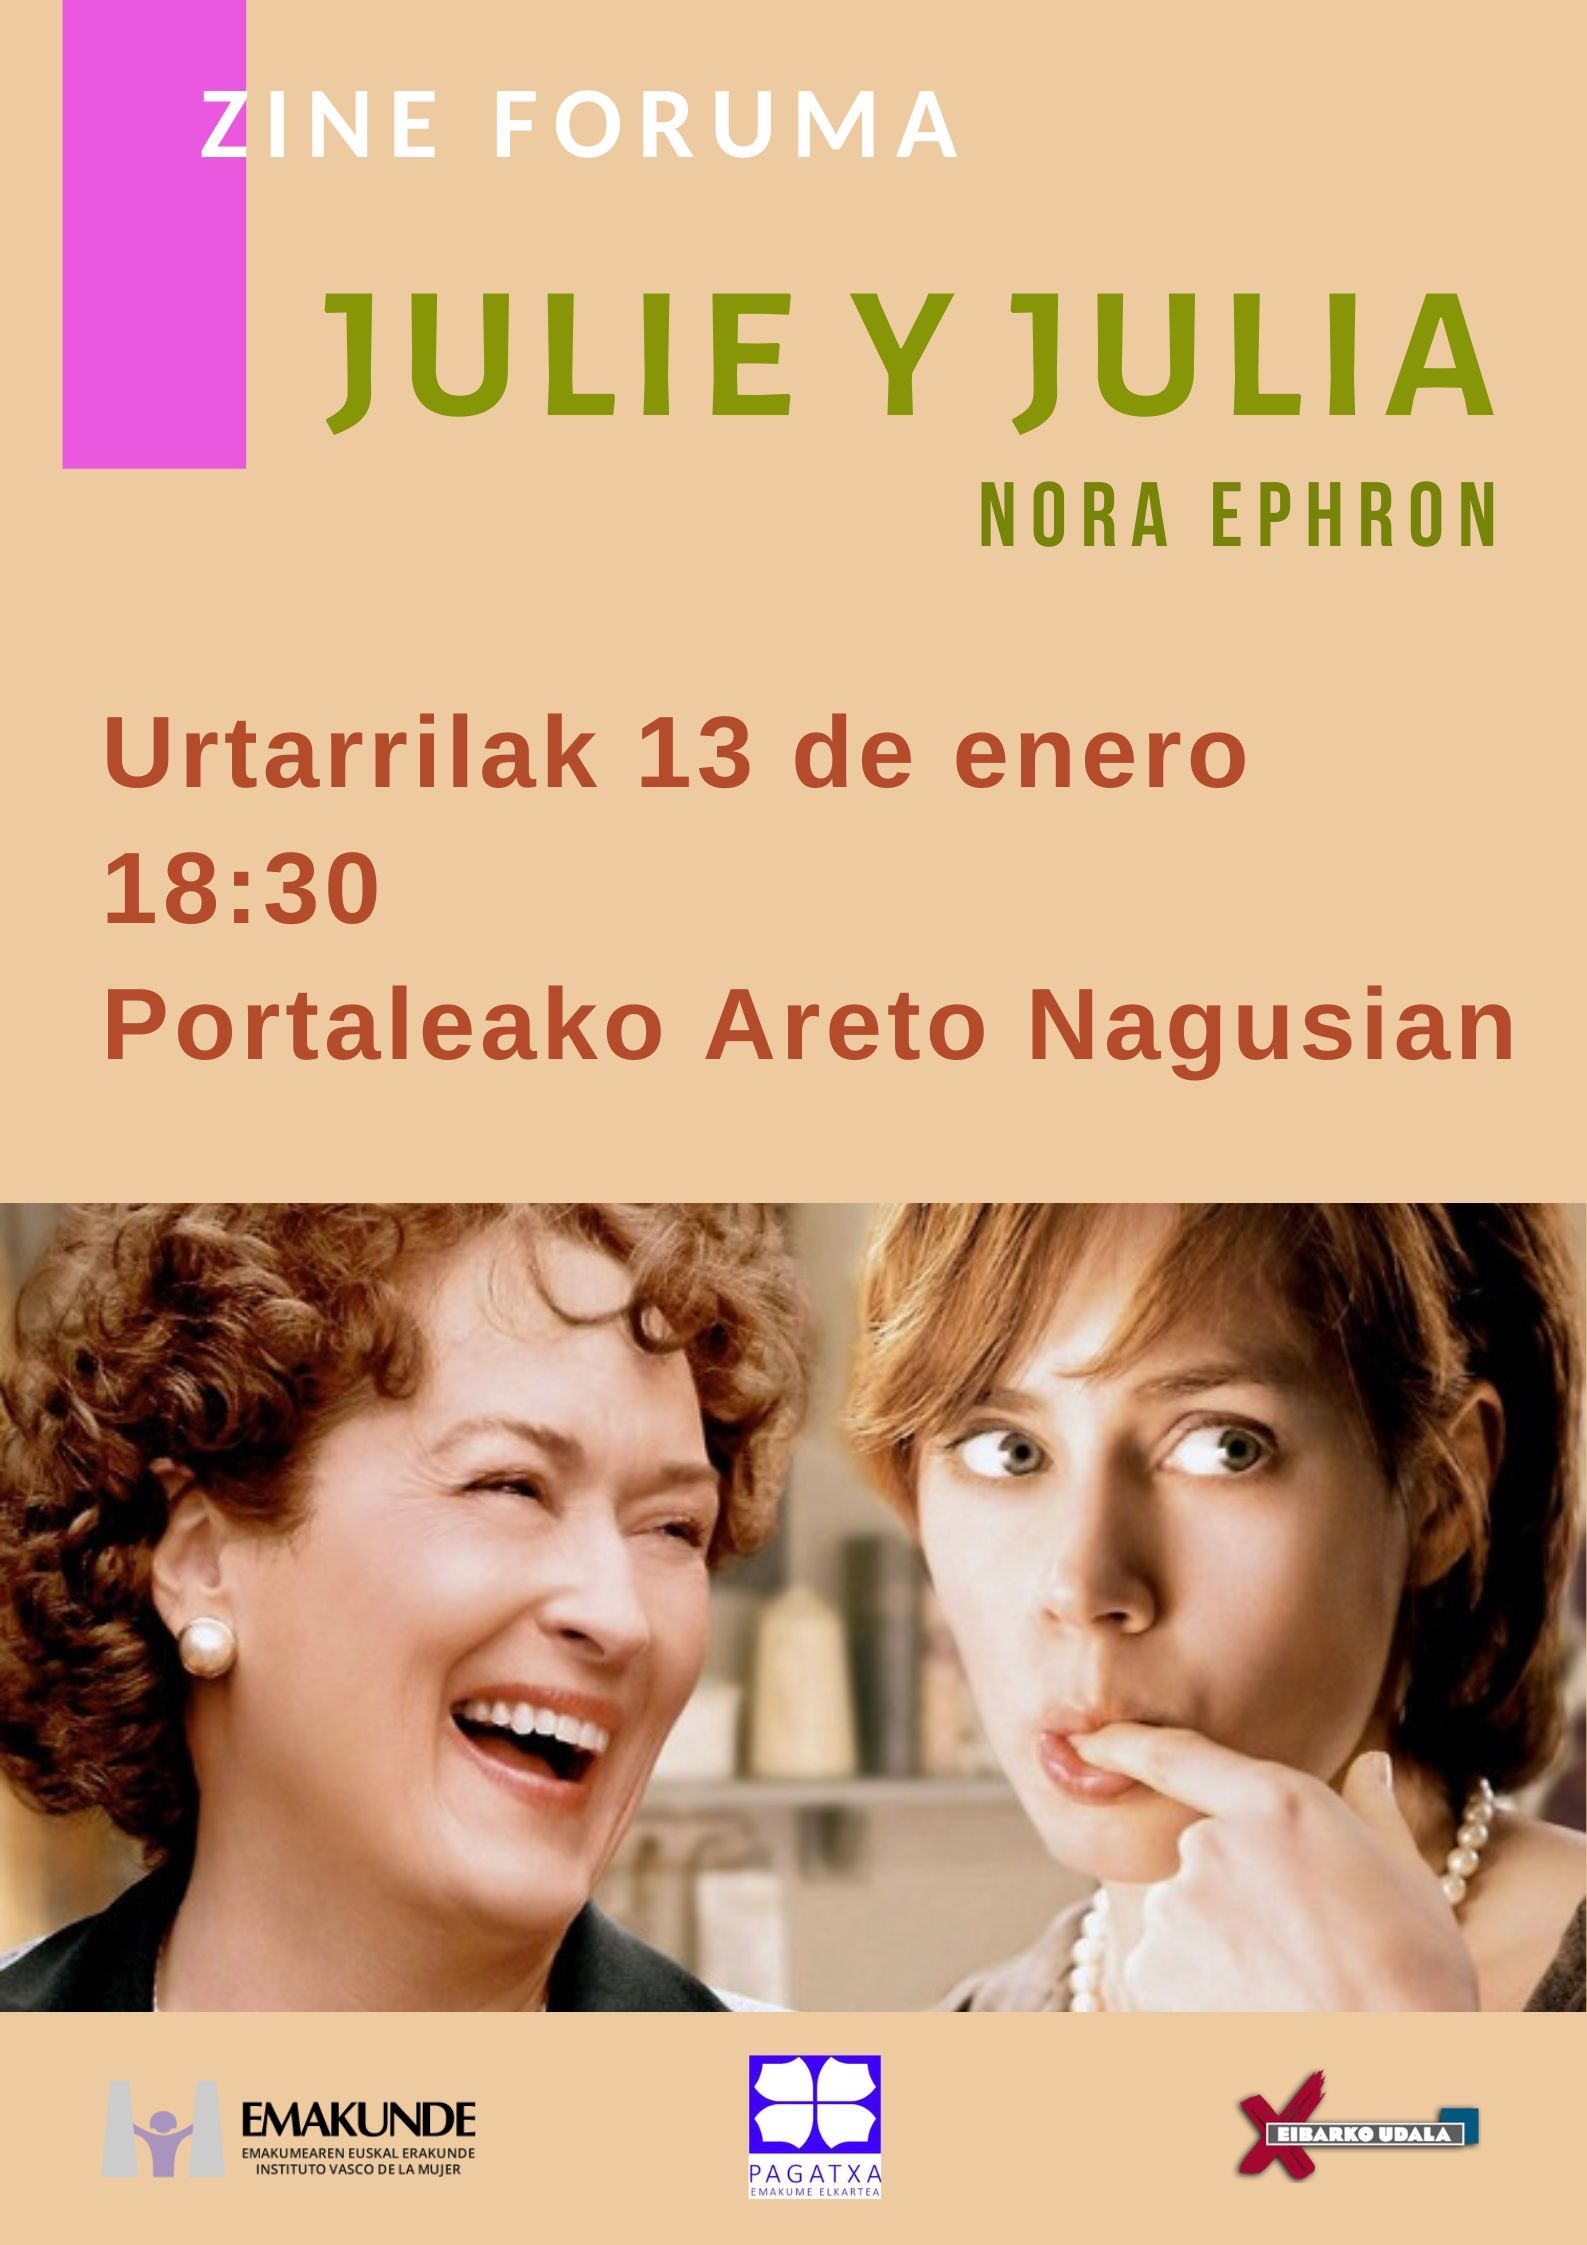 Cine Forum: Julie y Julia